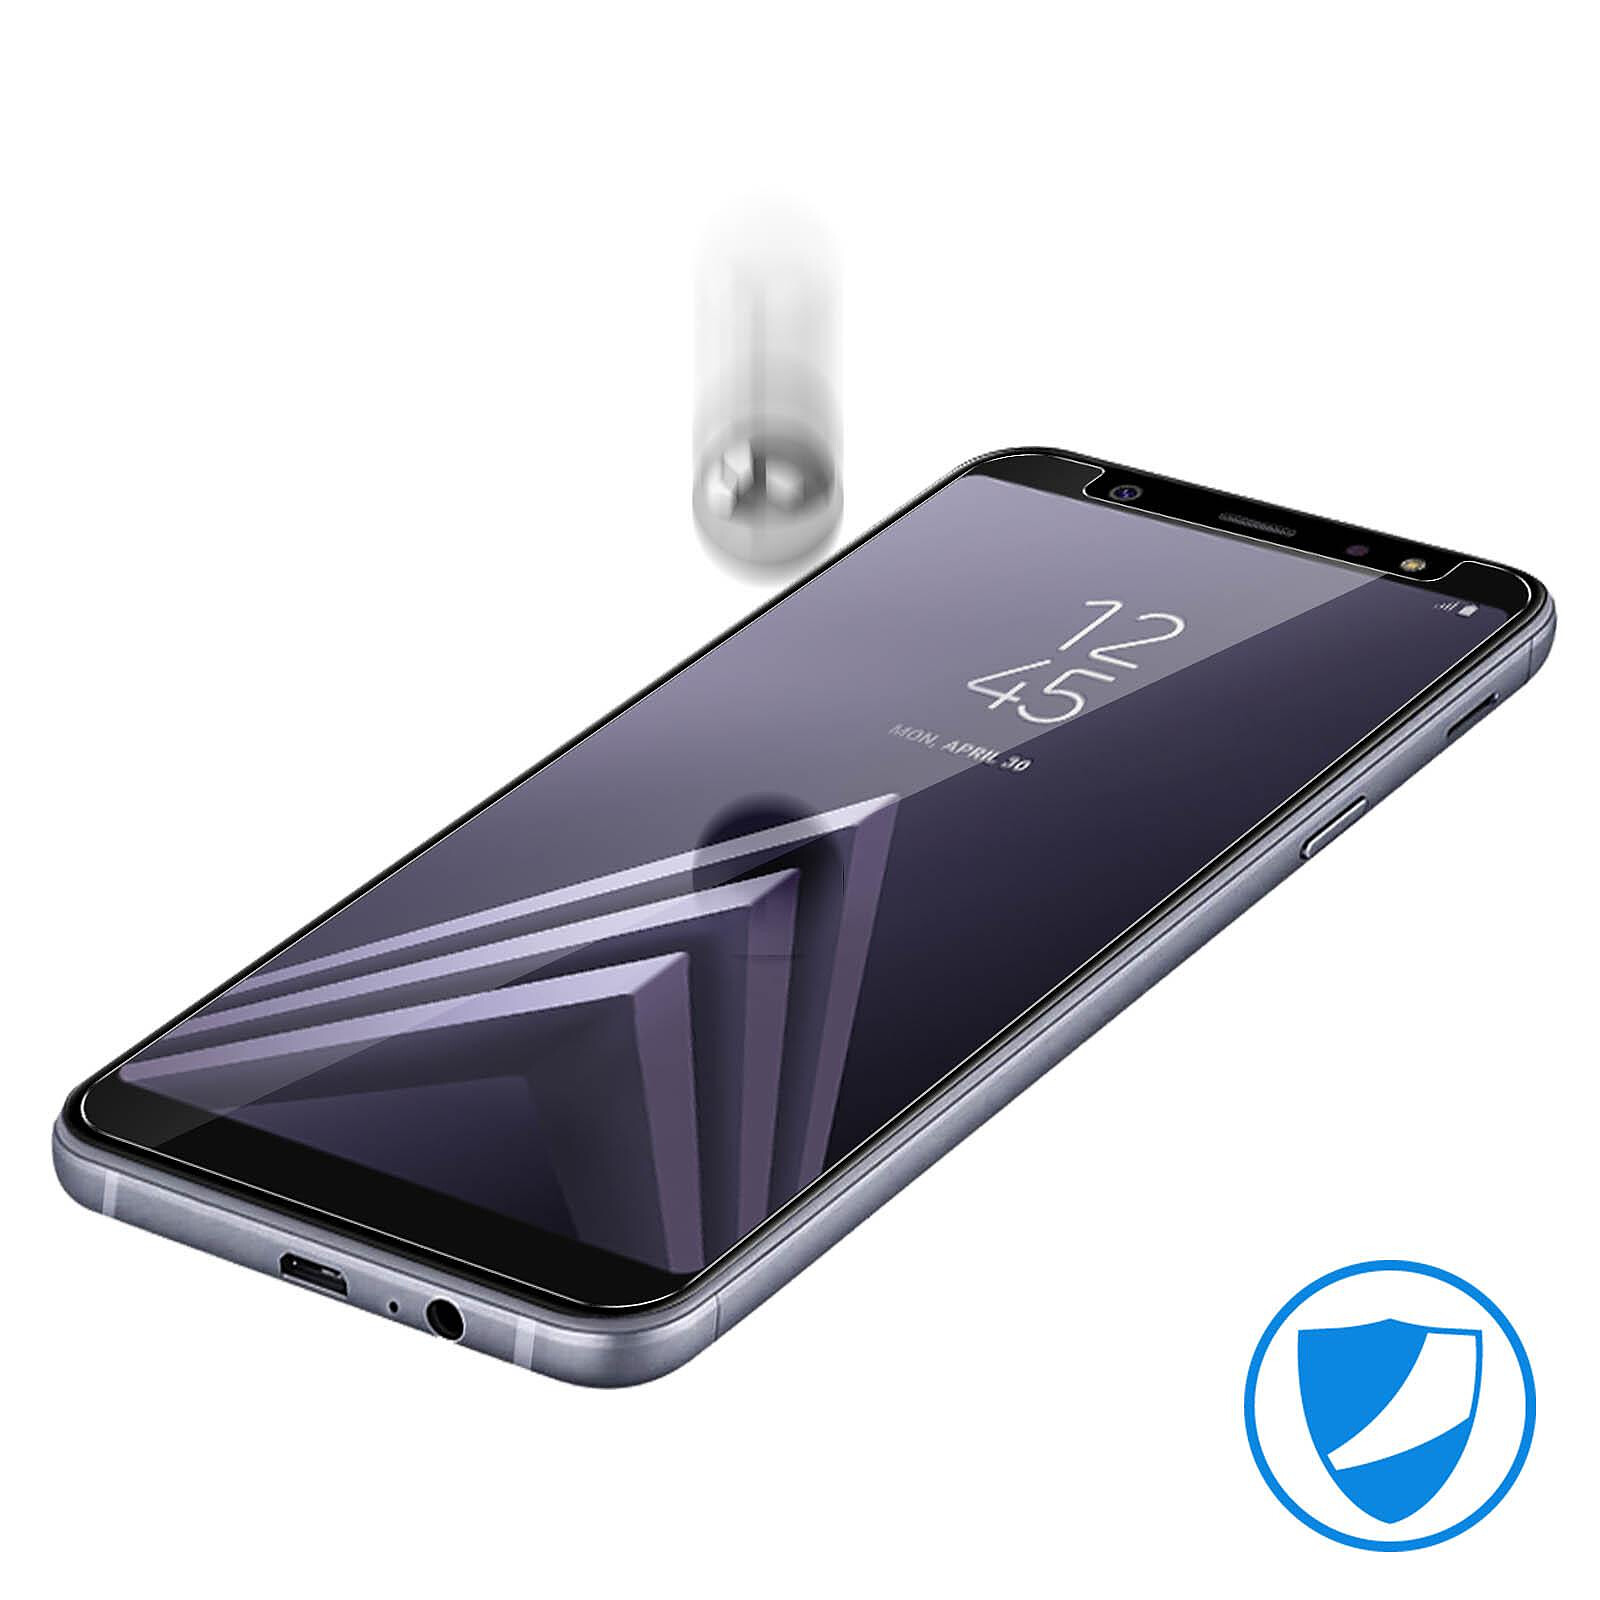 Verre trempé Galaxy A6 2018 - Film vitre protection écran Samsung Galaxy A6  2018